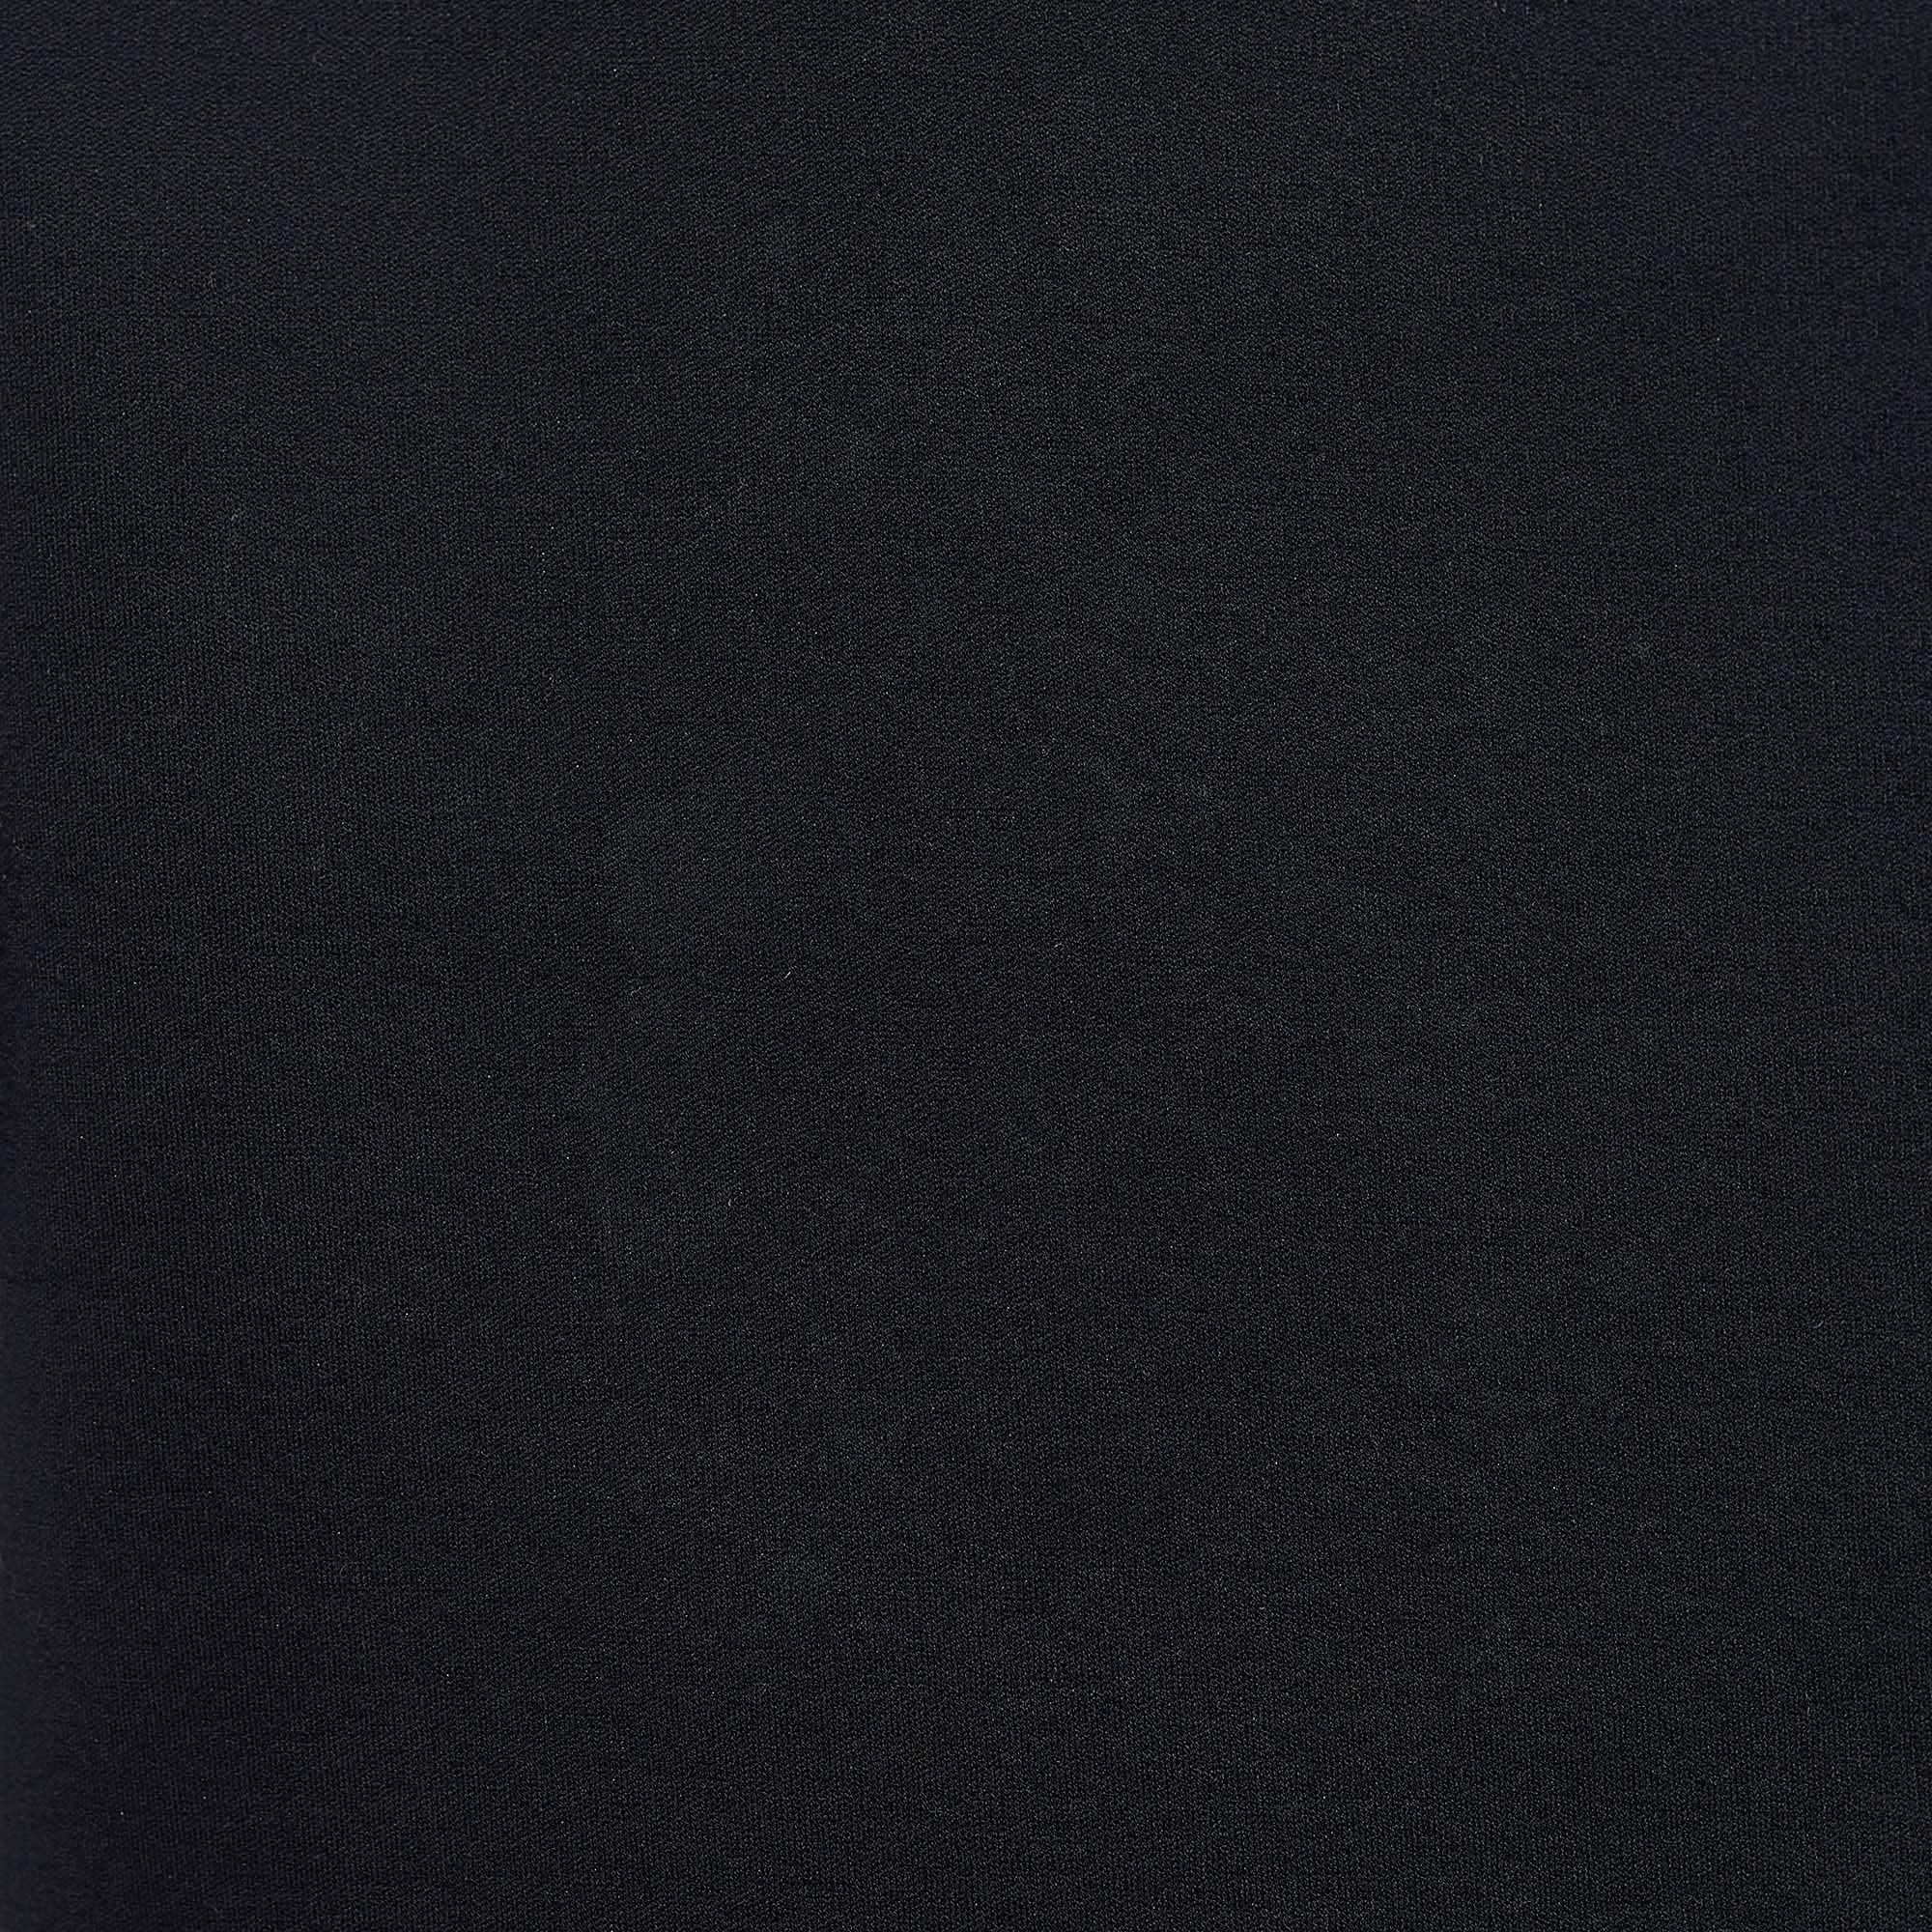 Fendi Black Neoprene Karlito Fur Applique Cropped Jumper M